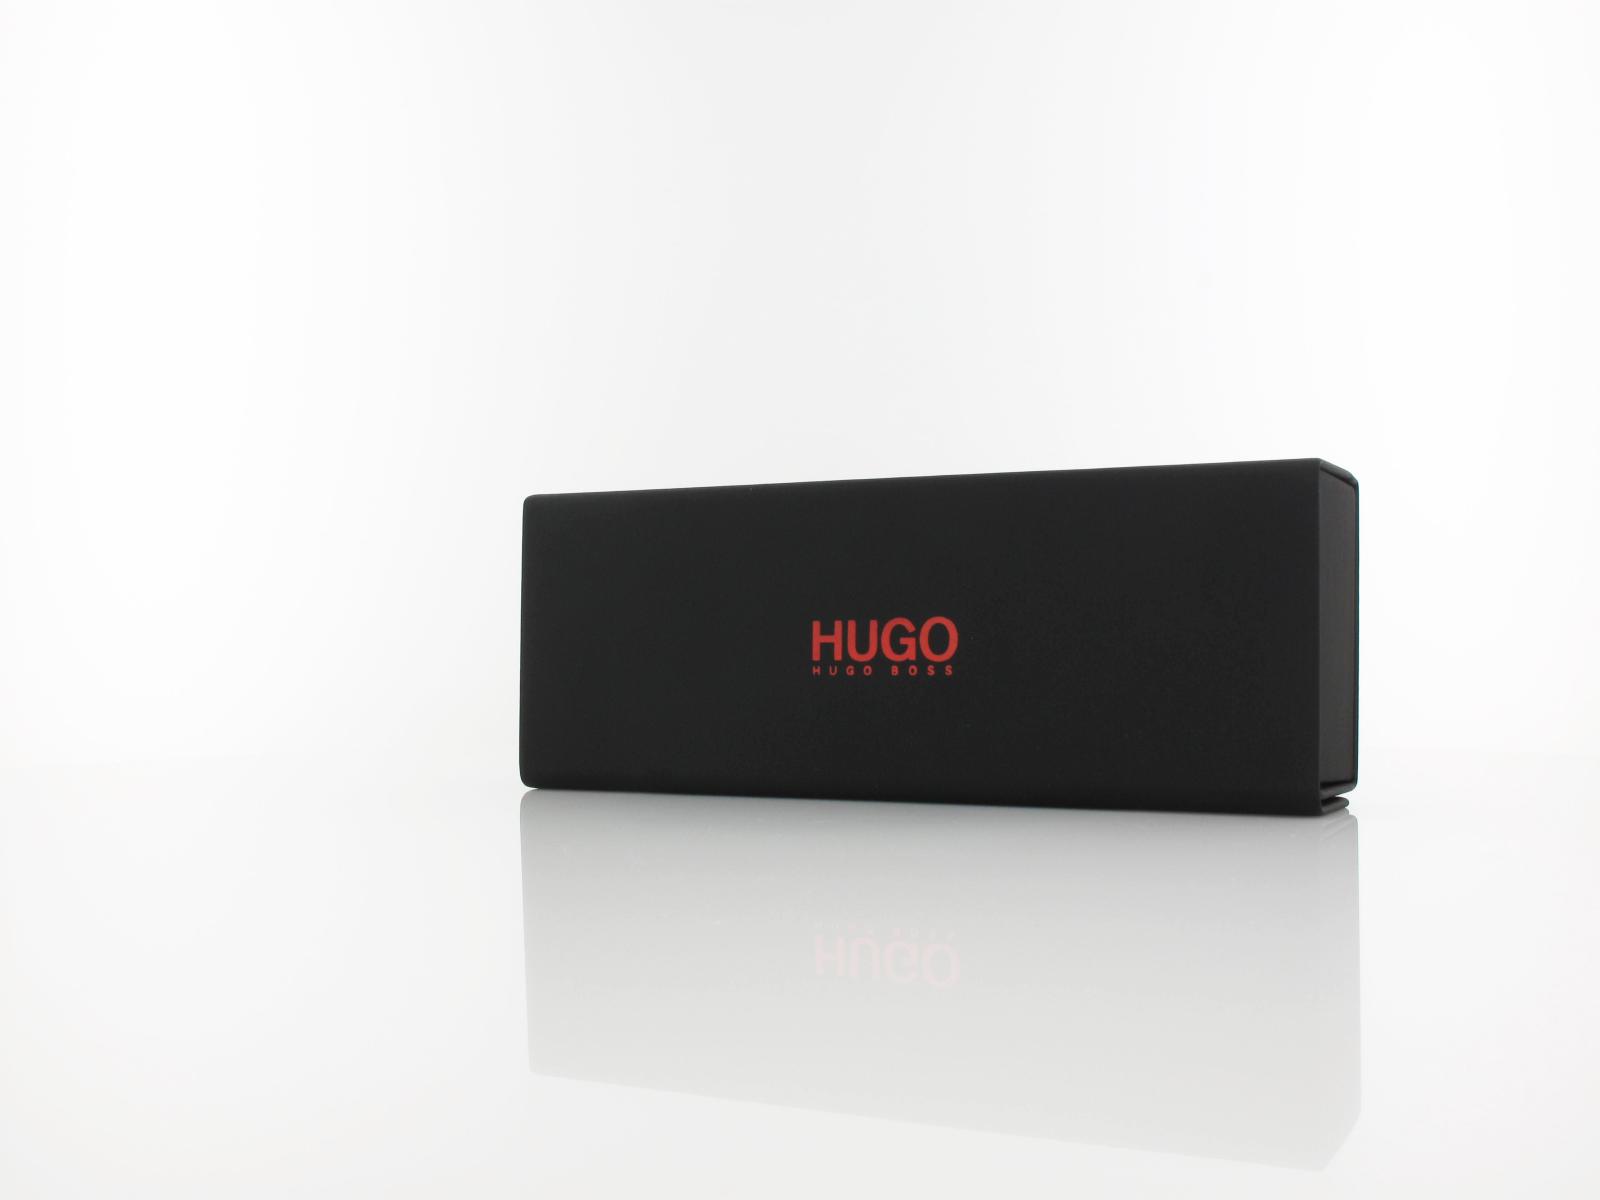 Hugo | HG 1231 0UC 53 | red havana